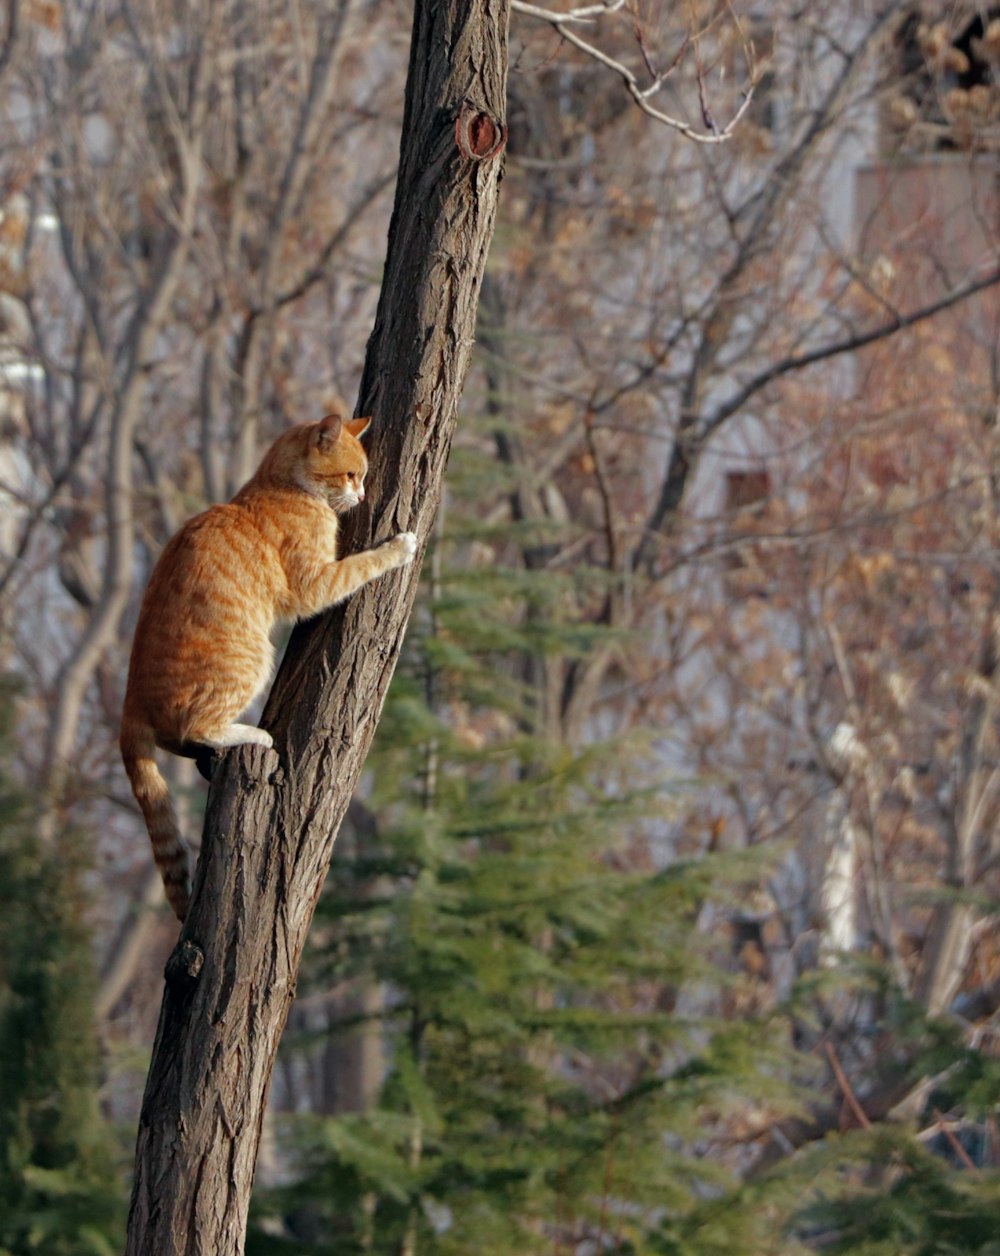 an orange cat climbing up a tree branch